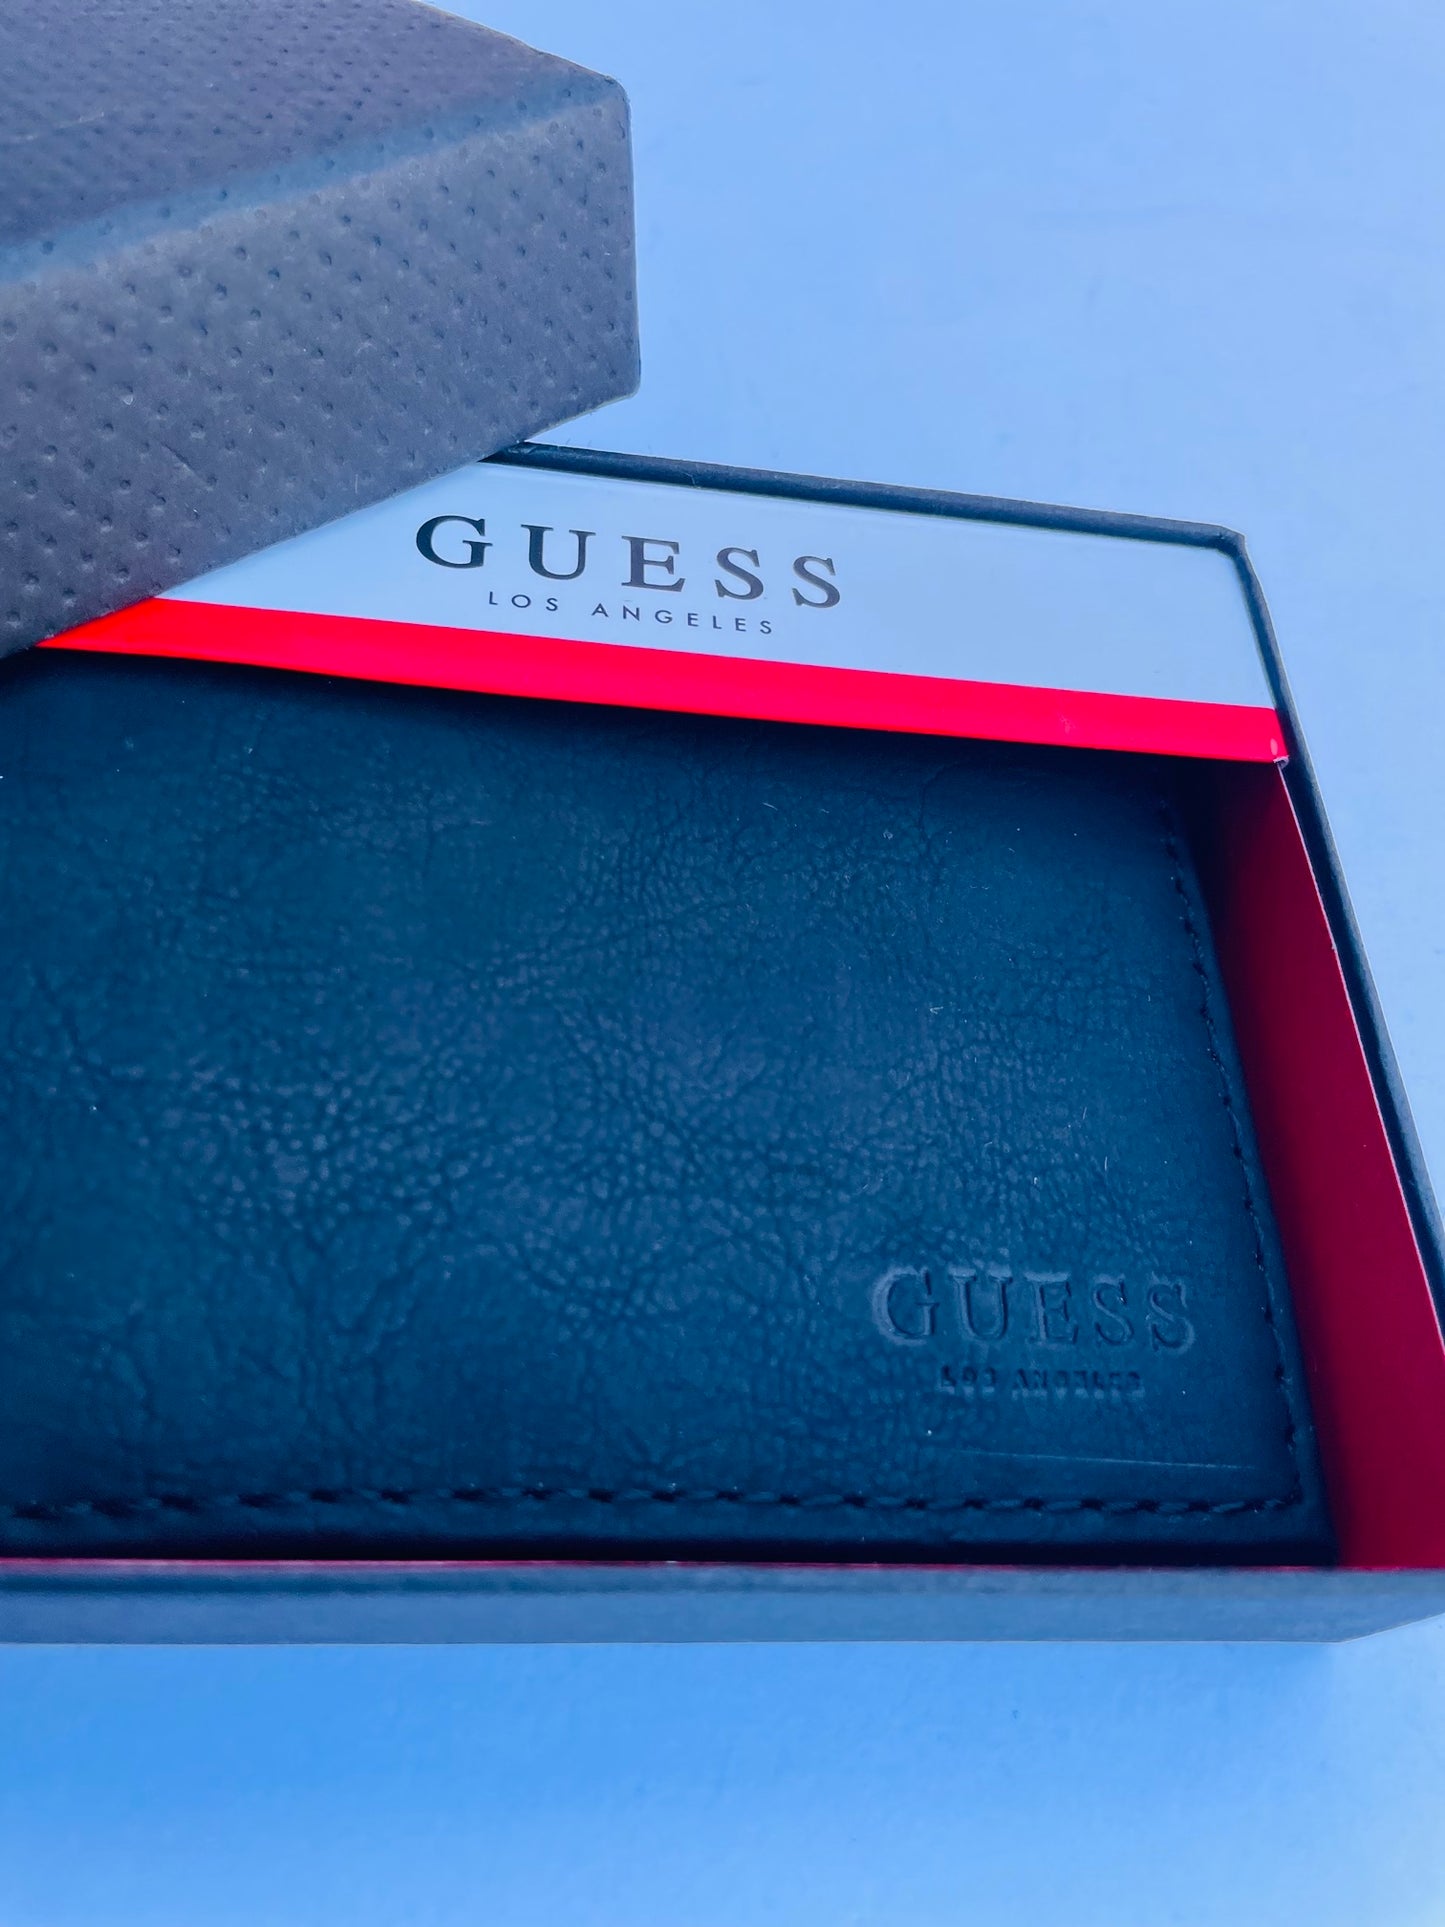 Guess wallet for men